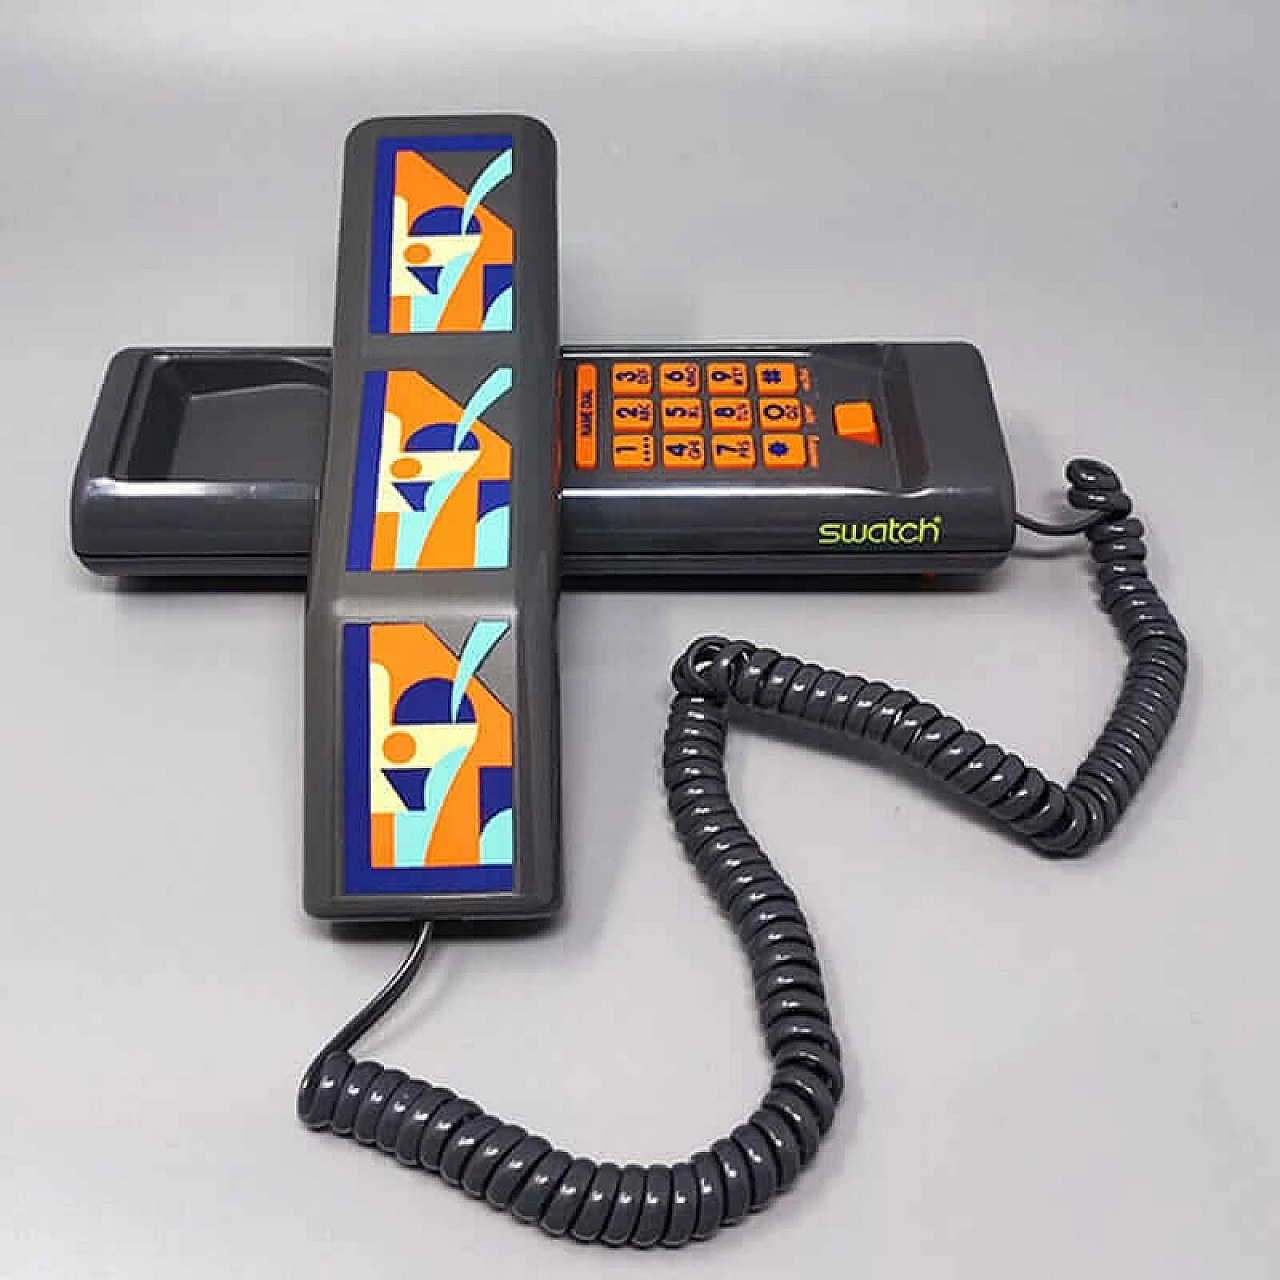 Deco Swatch Twin Phone landline phone, 1980s 4